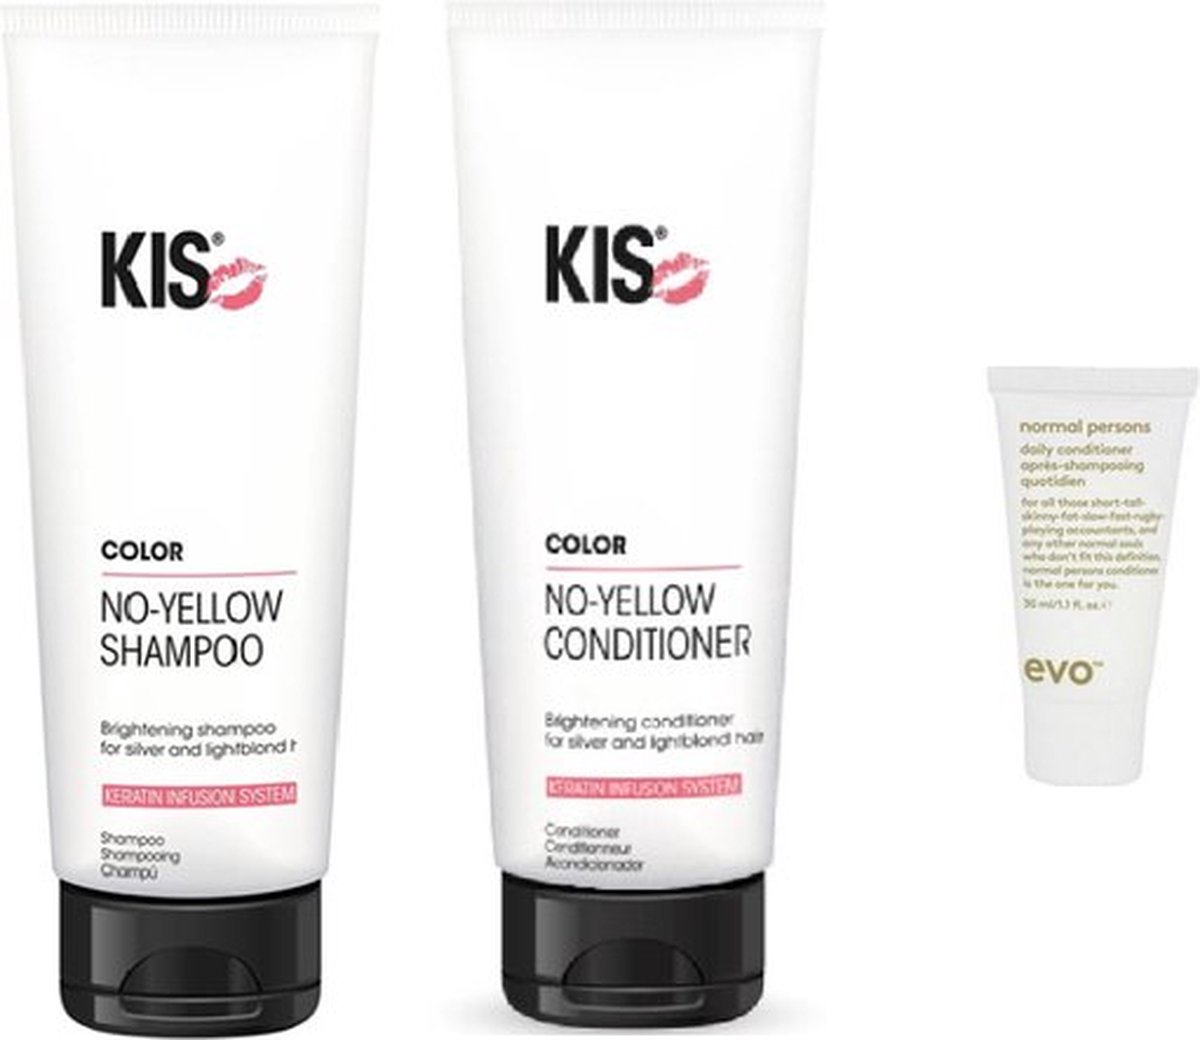 Kis No-Yellow Conditioner + Shampoo Duo Set + Gratis Evo Travel Size